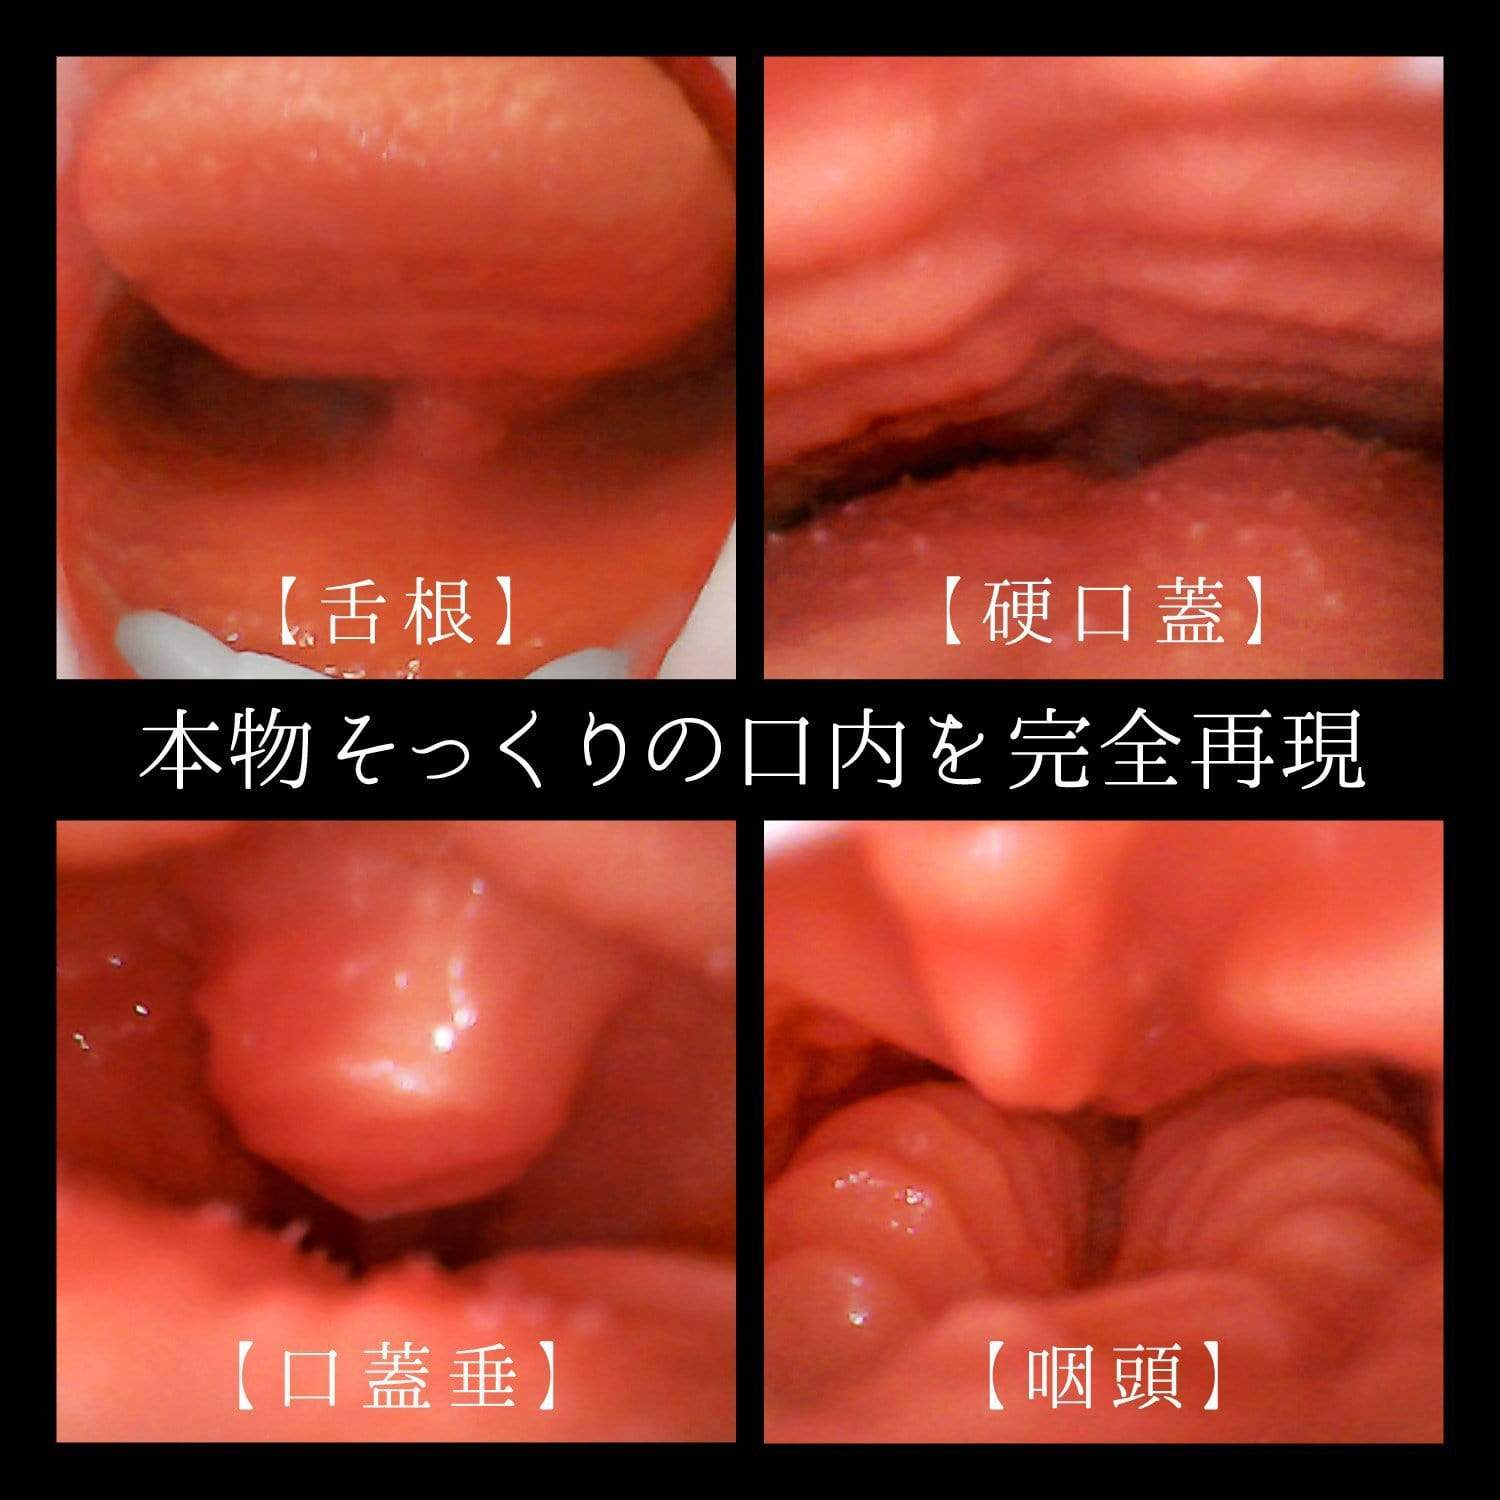 NPG - Geki Fera Vacuum Sakuragi Rin Mouth Mastubator (Beige) -  Masturbator Vagina (Non Vibration)  Durio.sg